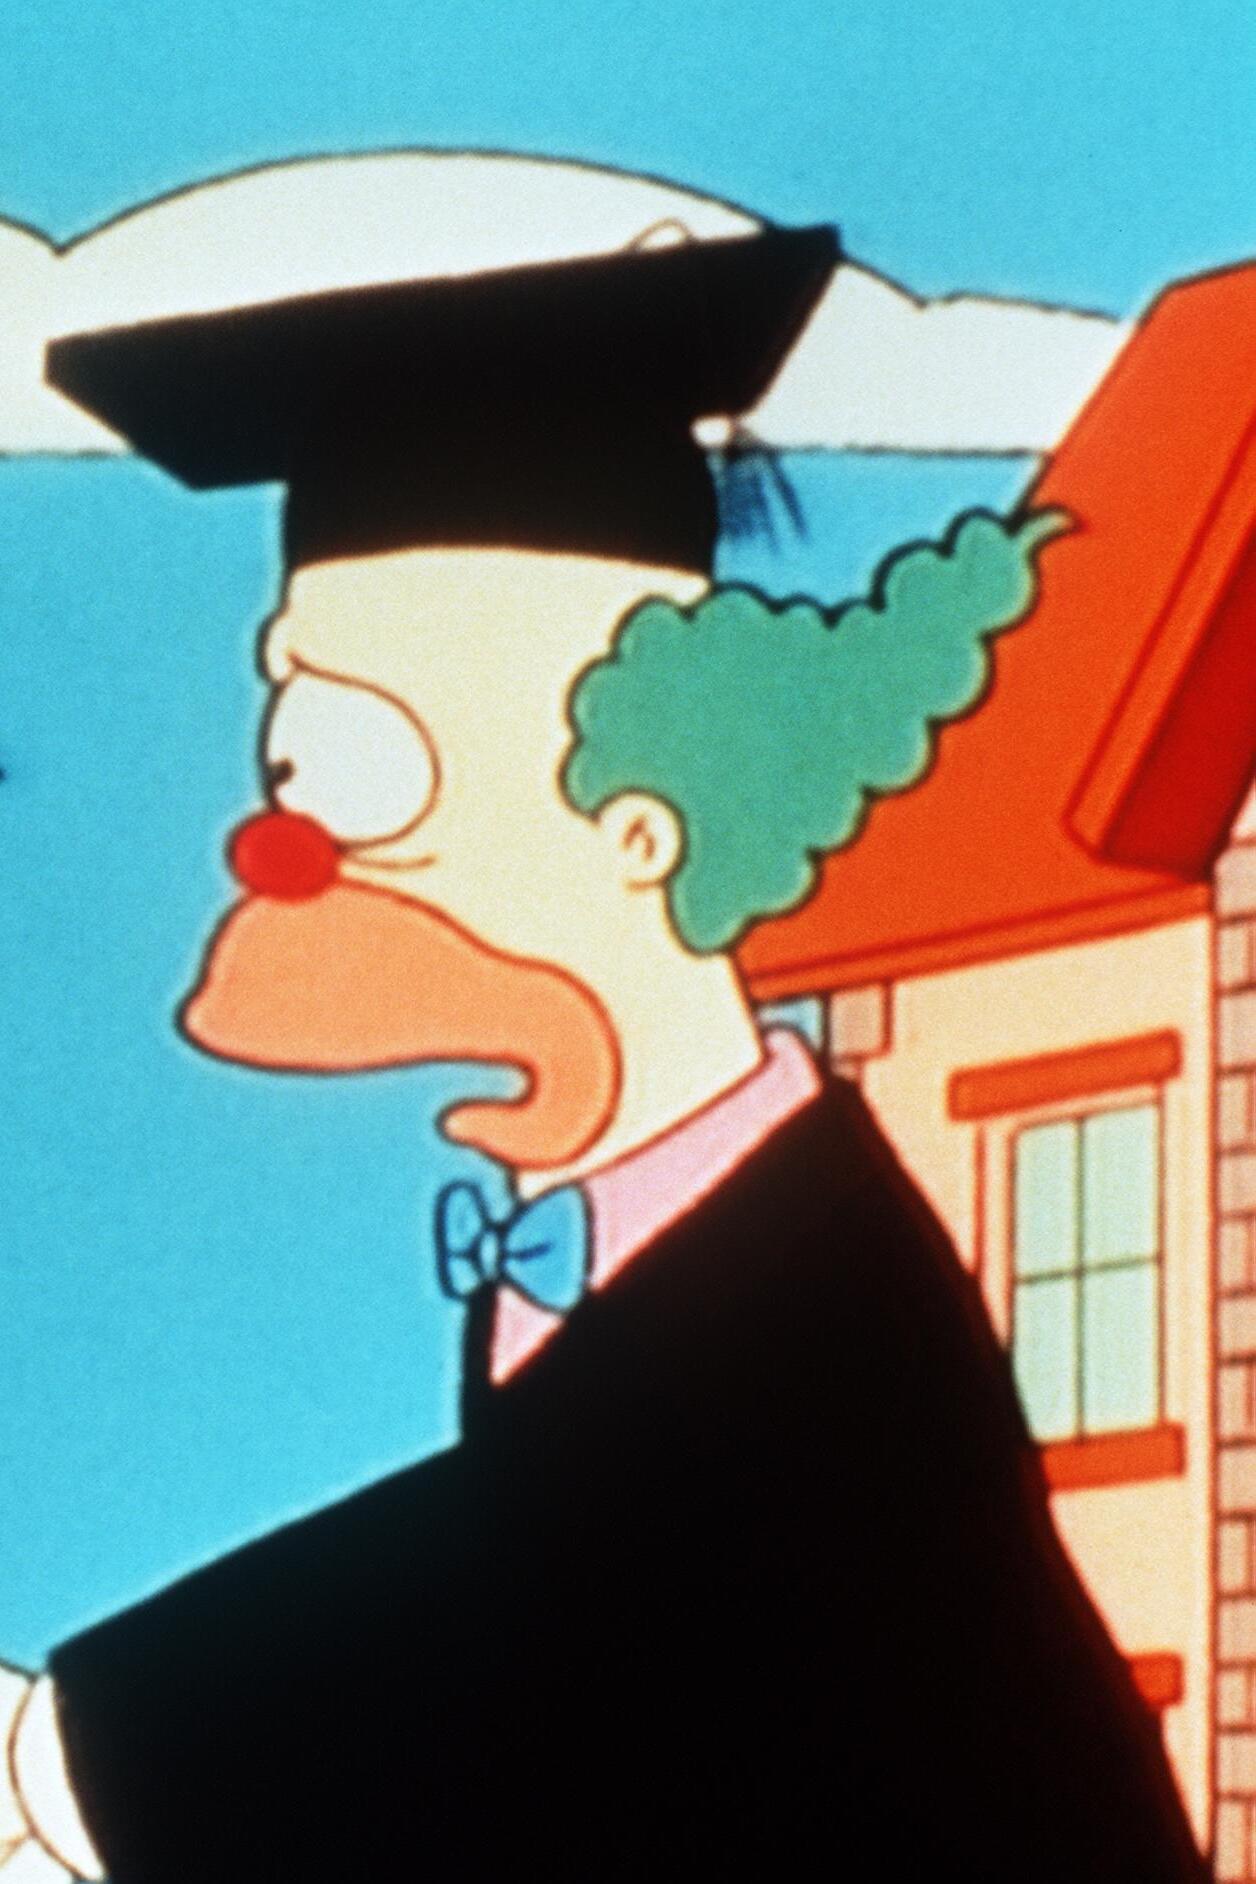 The Simpsons - Homie the Clown